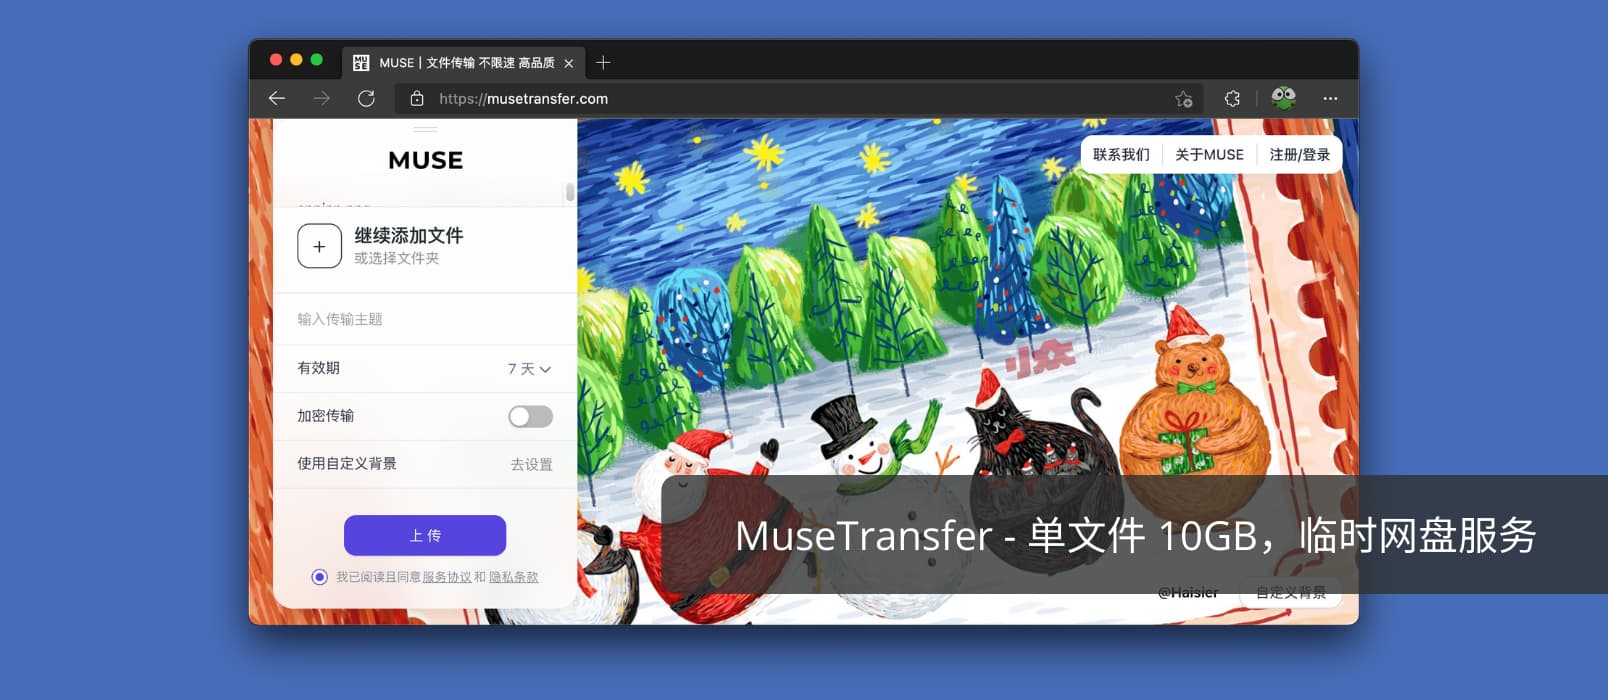 MuseTransfer - 单文件 10GB，又一款临时网盘服务